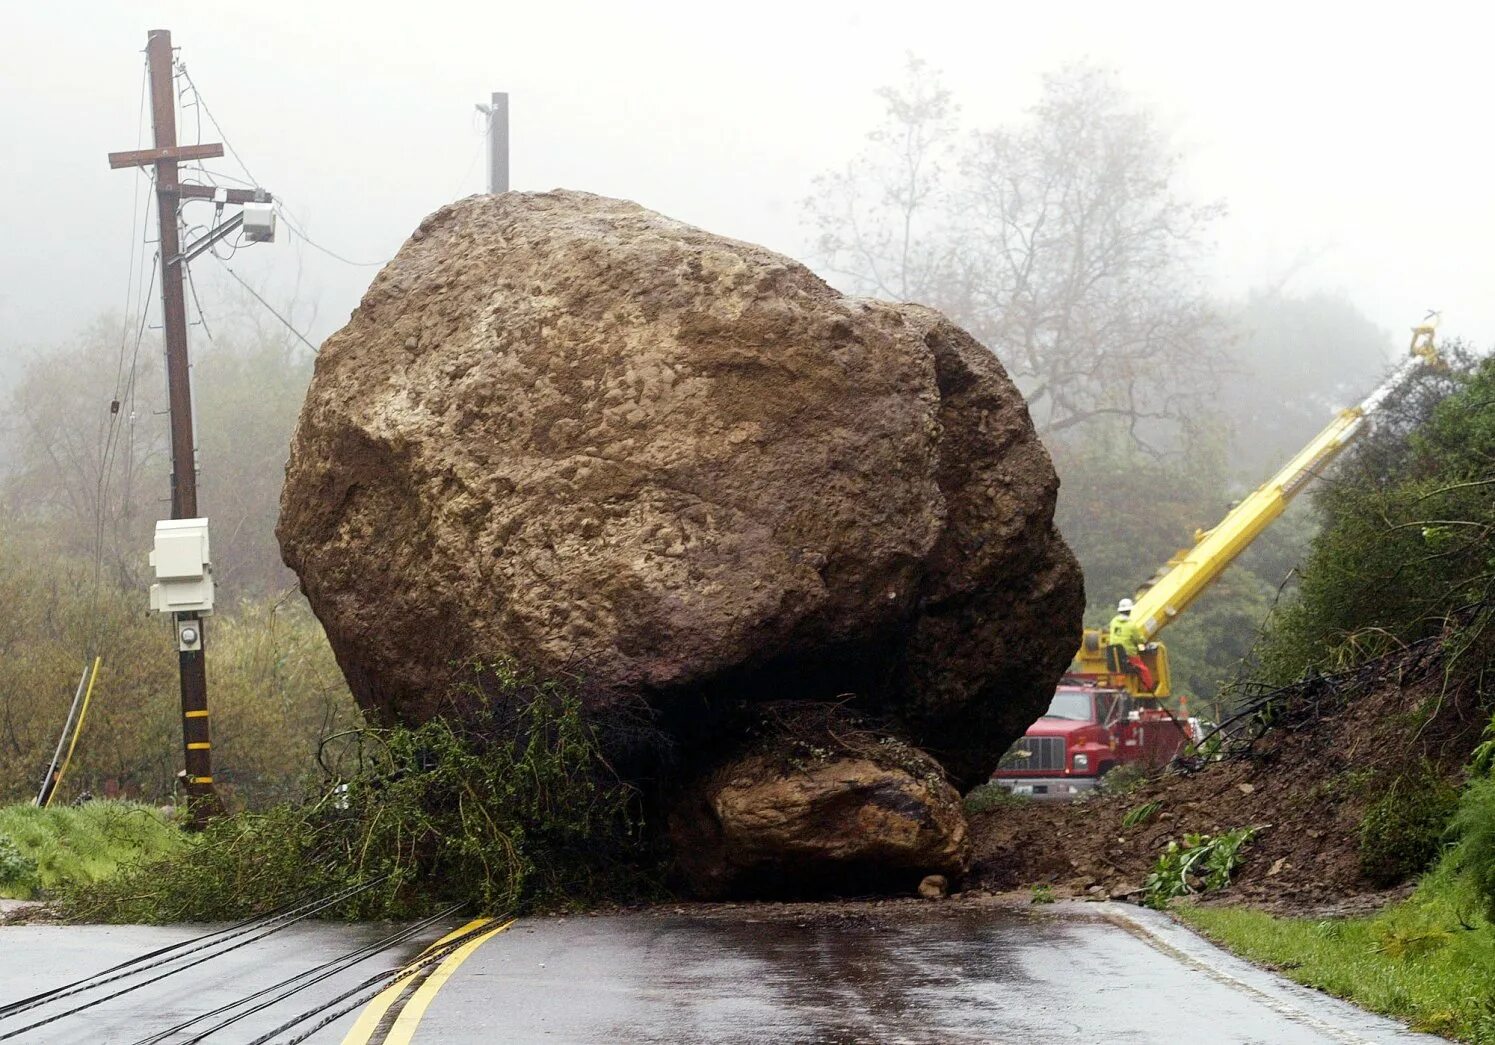 Препятствие на дороге. Валун на дороге. Камень на дороге. Огромный камень на дороге.